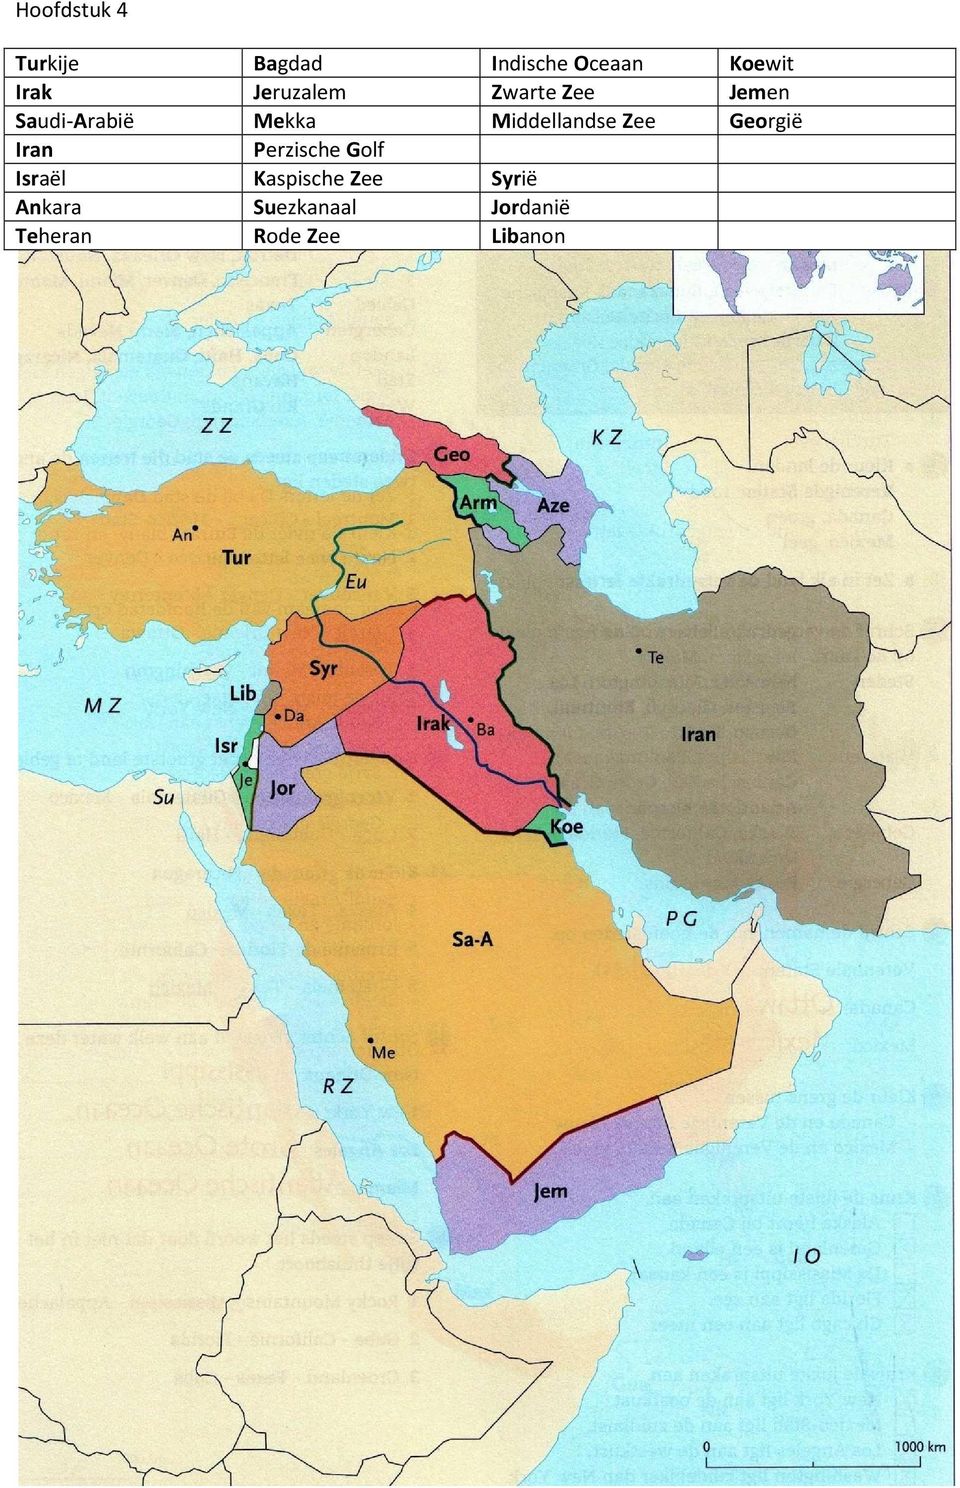 Middellandse Zee Georgië Iran Perzische Golf Israël